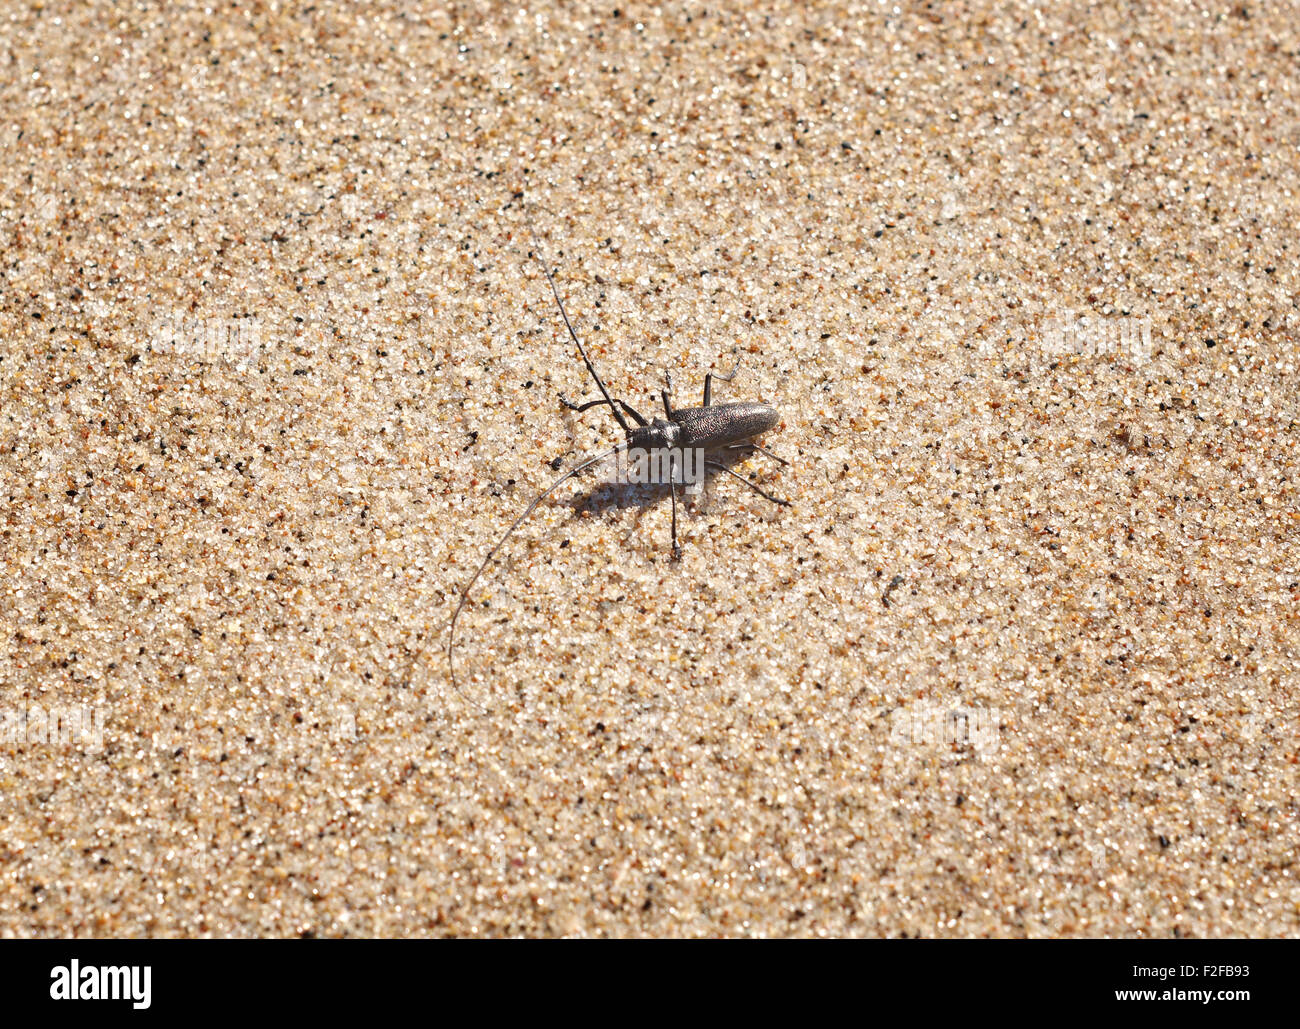 Monochamus - sawyer beetles Stock Photo